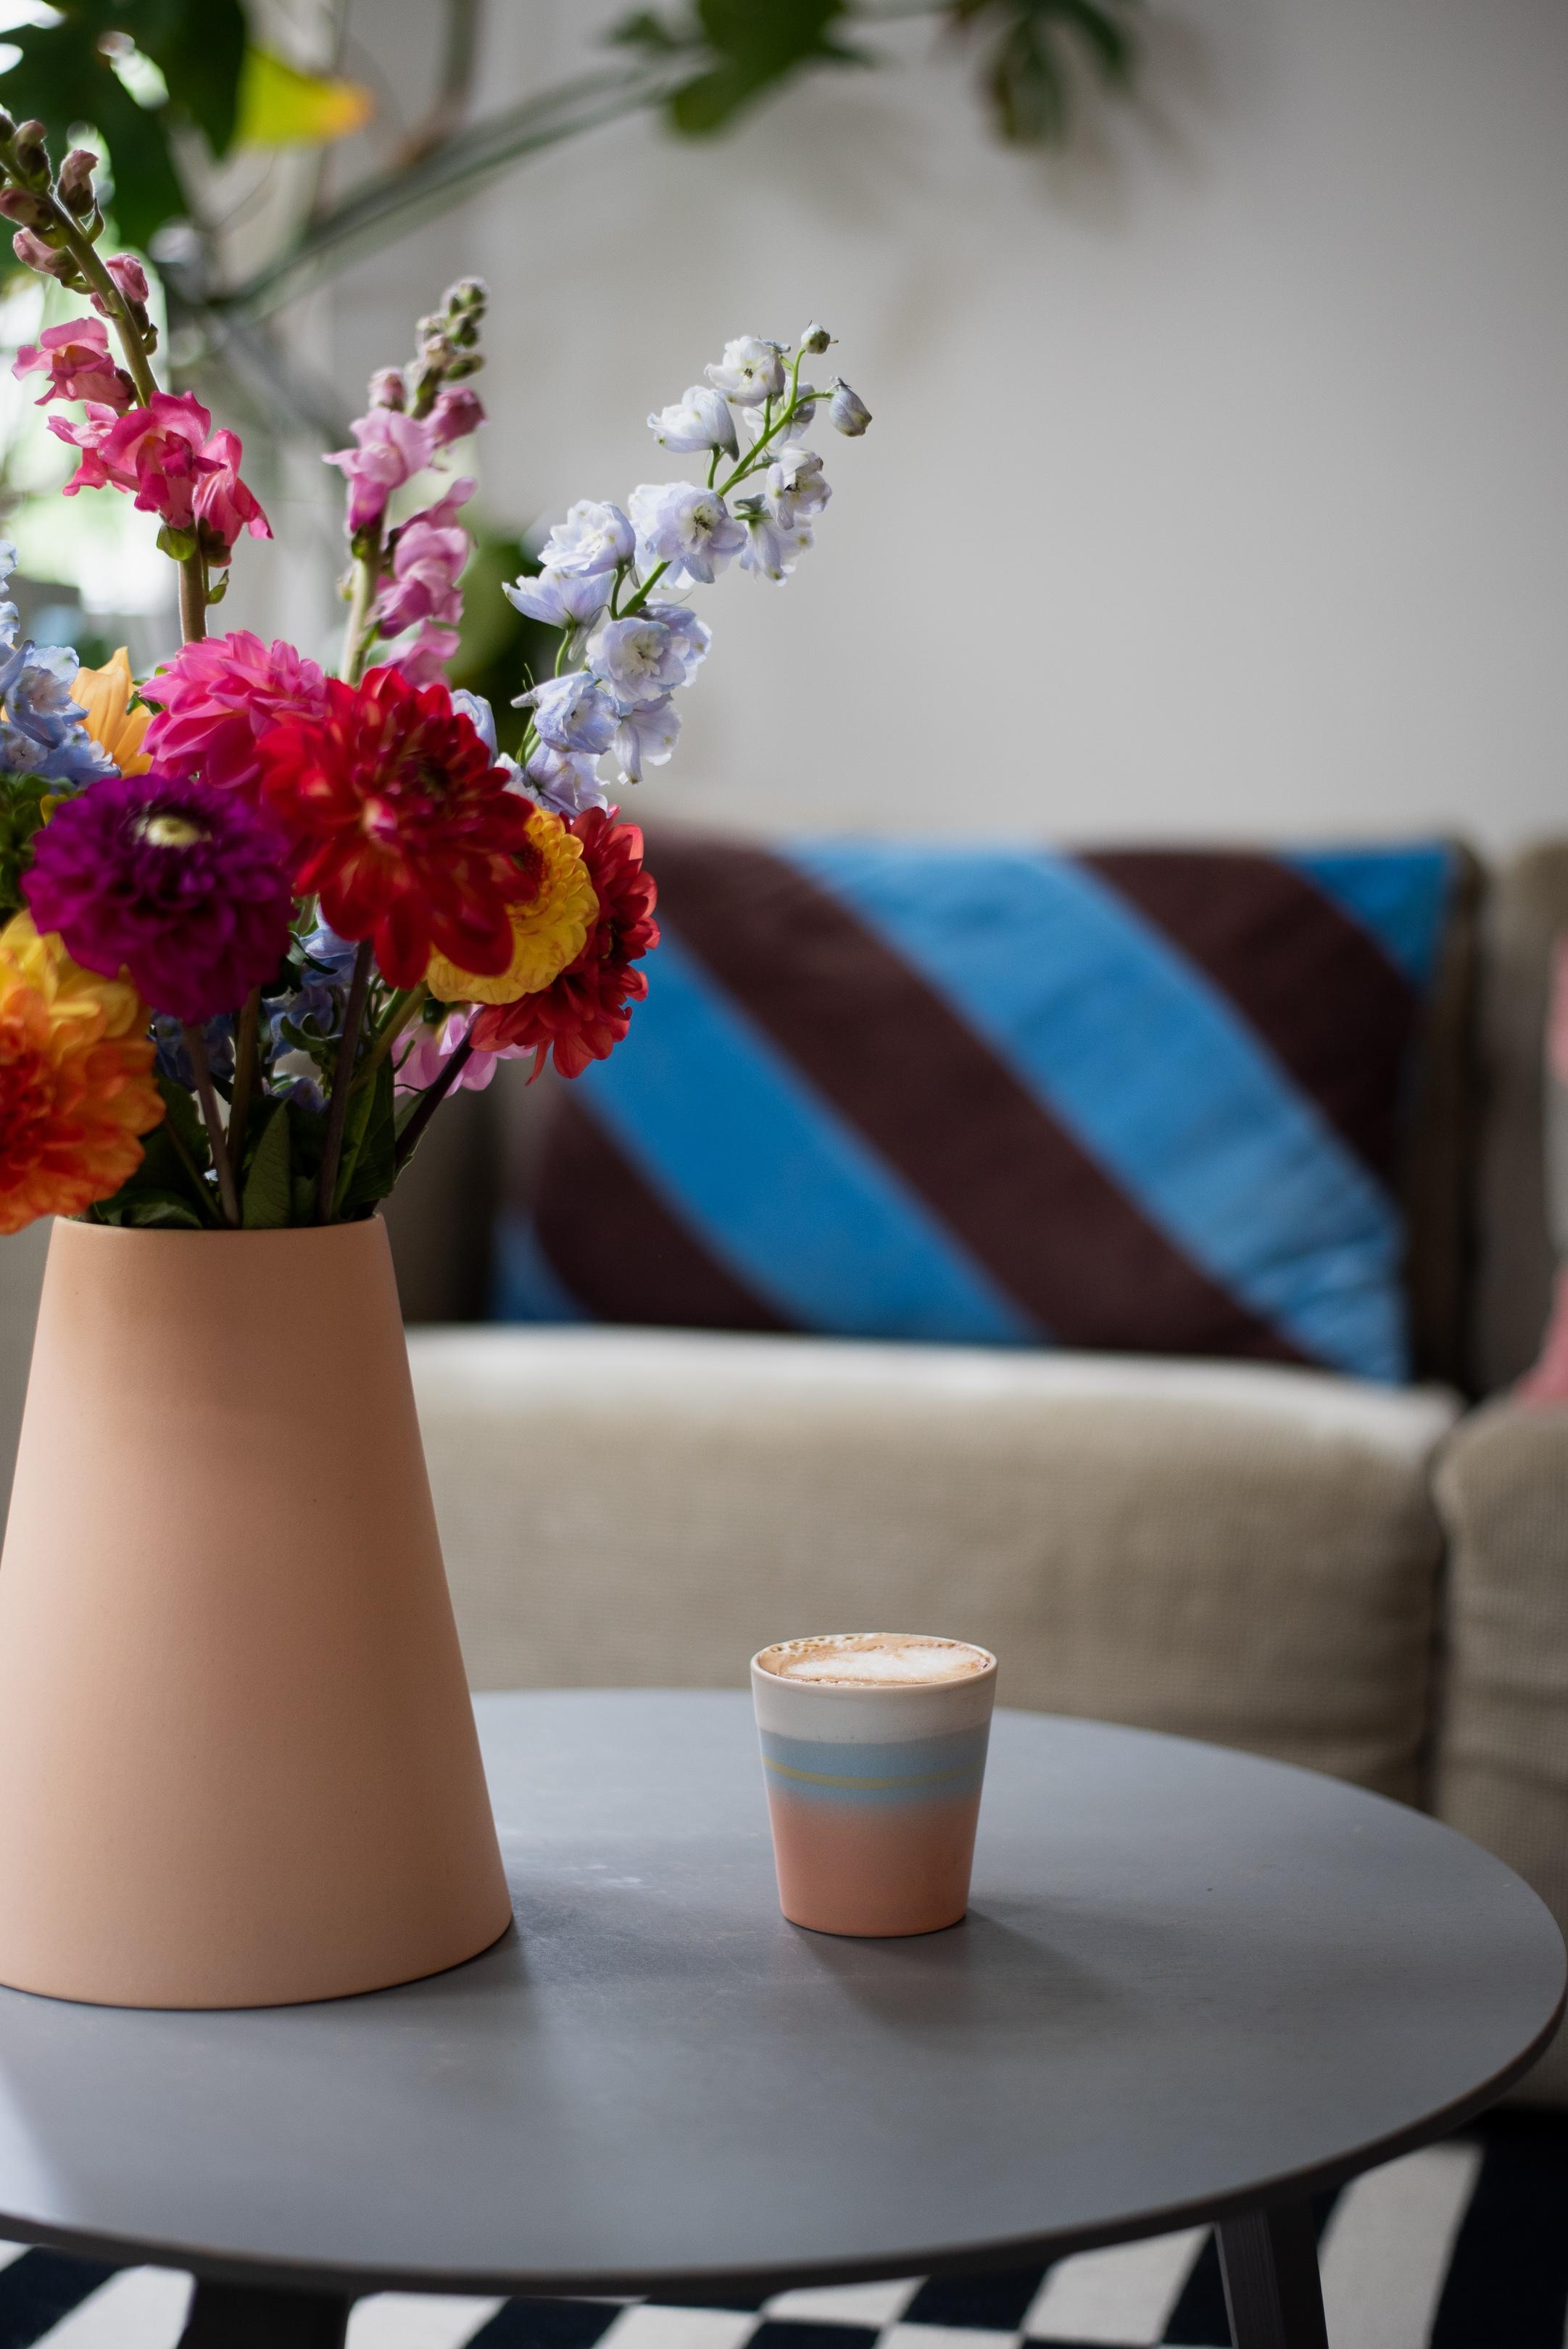 Guten Morgen 🌷☕️ #wohnzimmer #blumen #kaffee #keramik #interiorinspo #livingroom